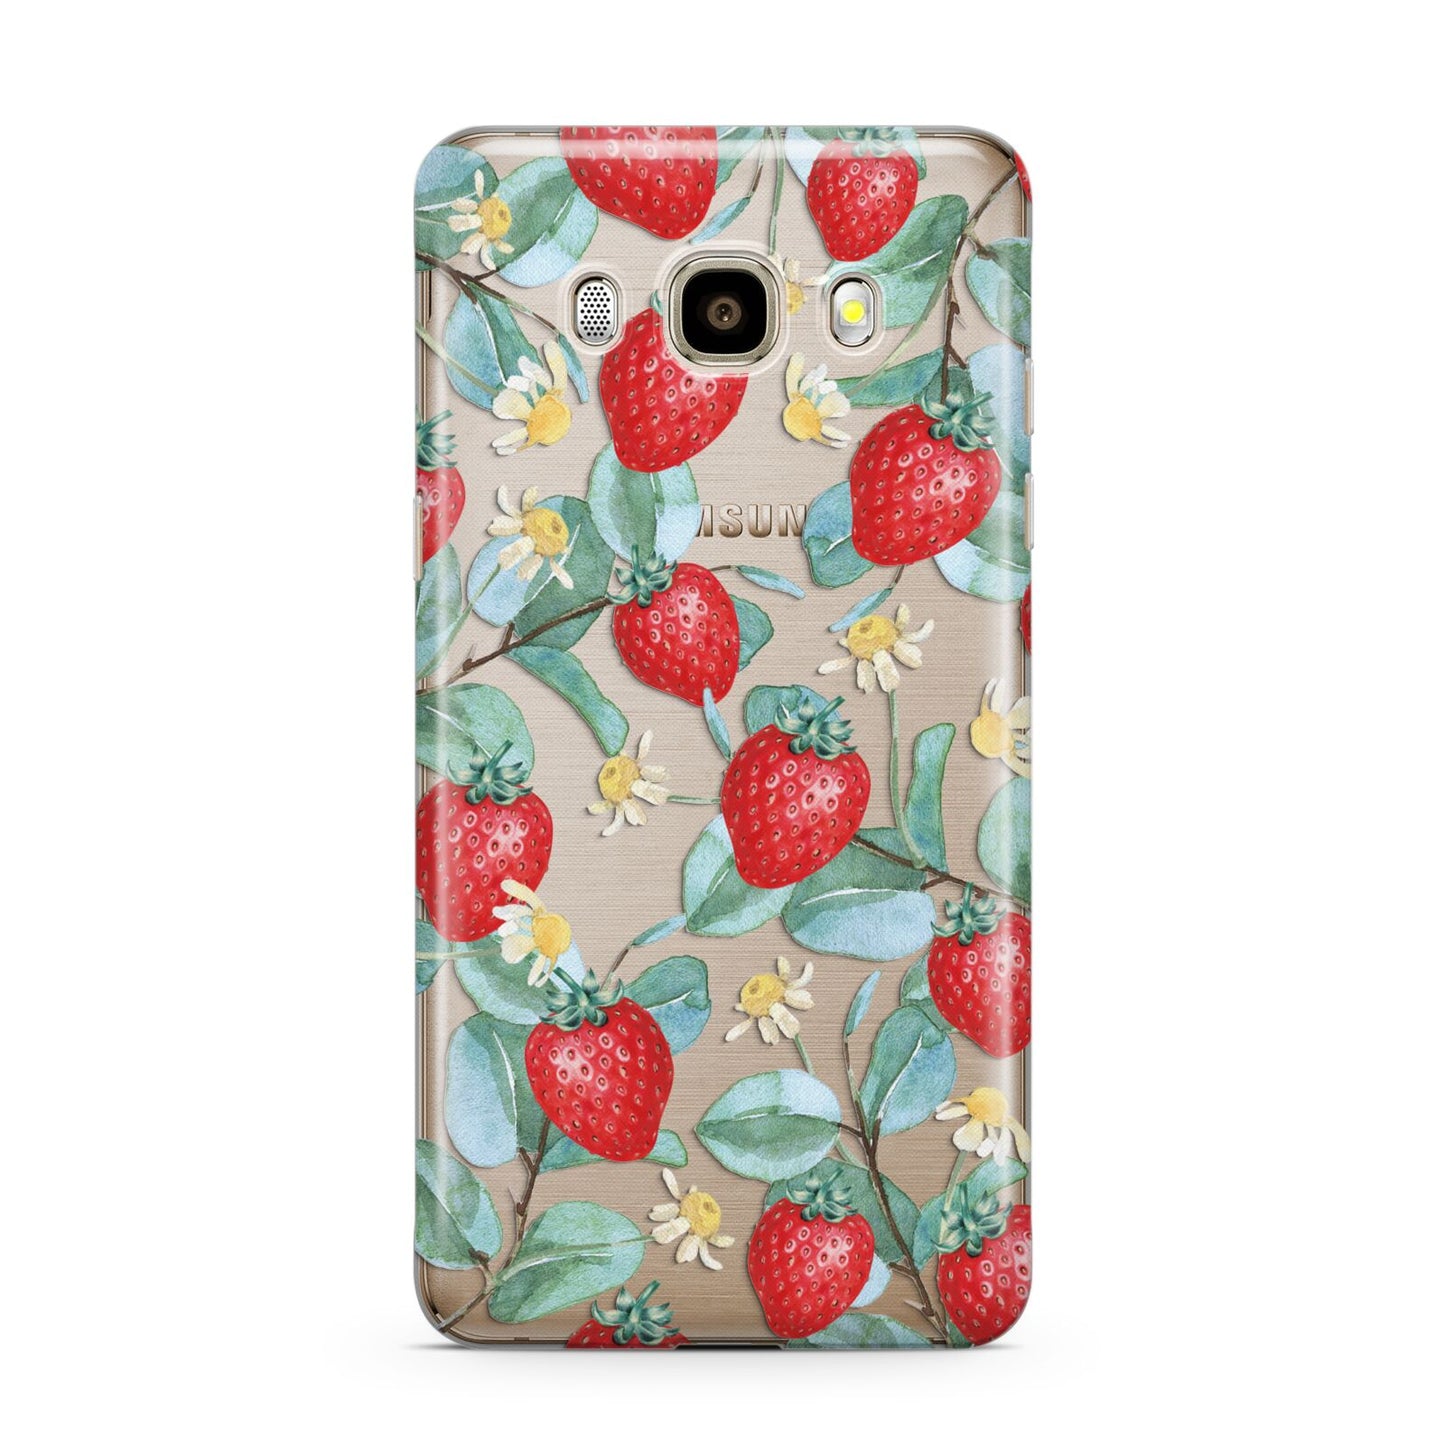 Strawberry Plant Samsung Galaxy J7 2016 Case on gold phone